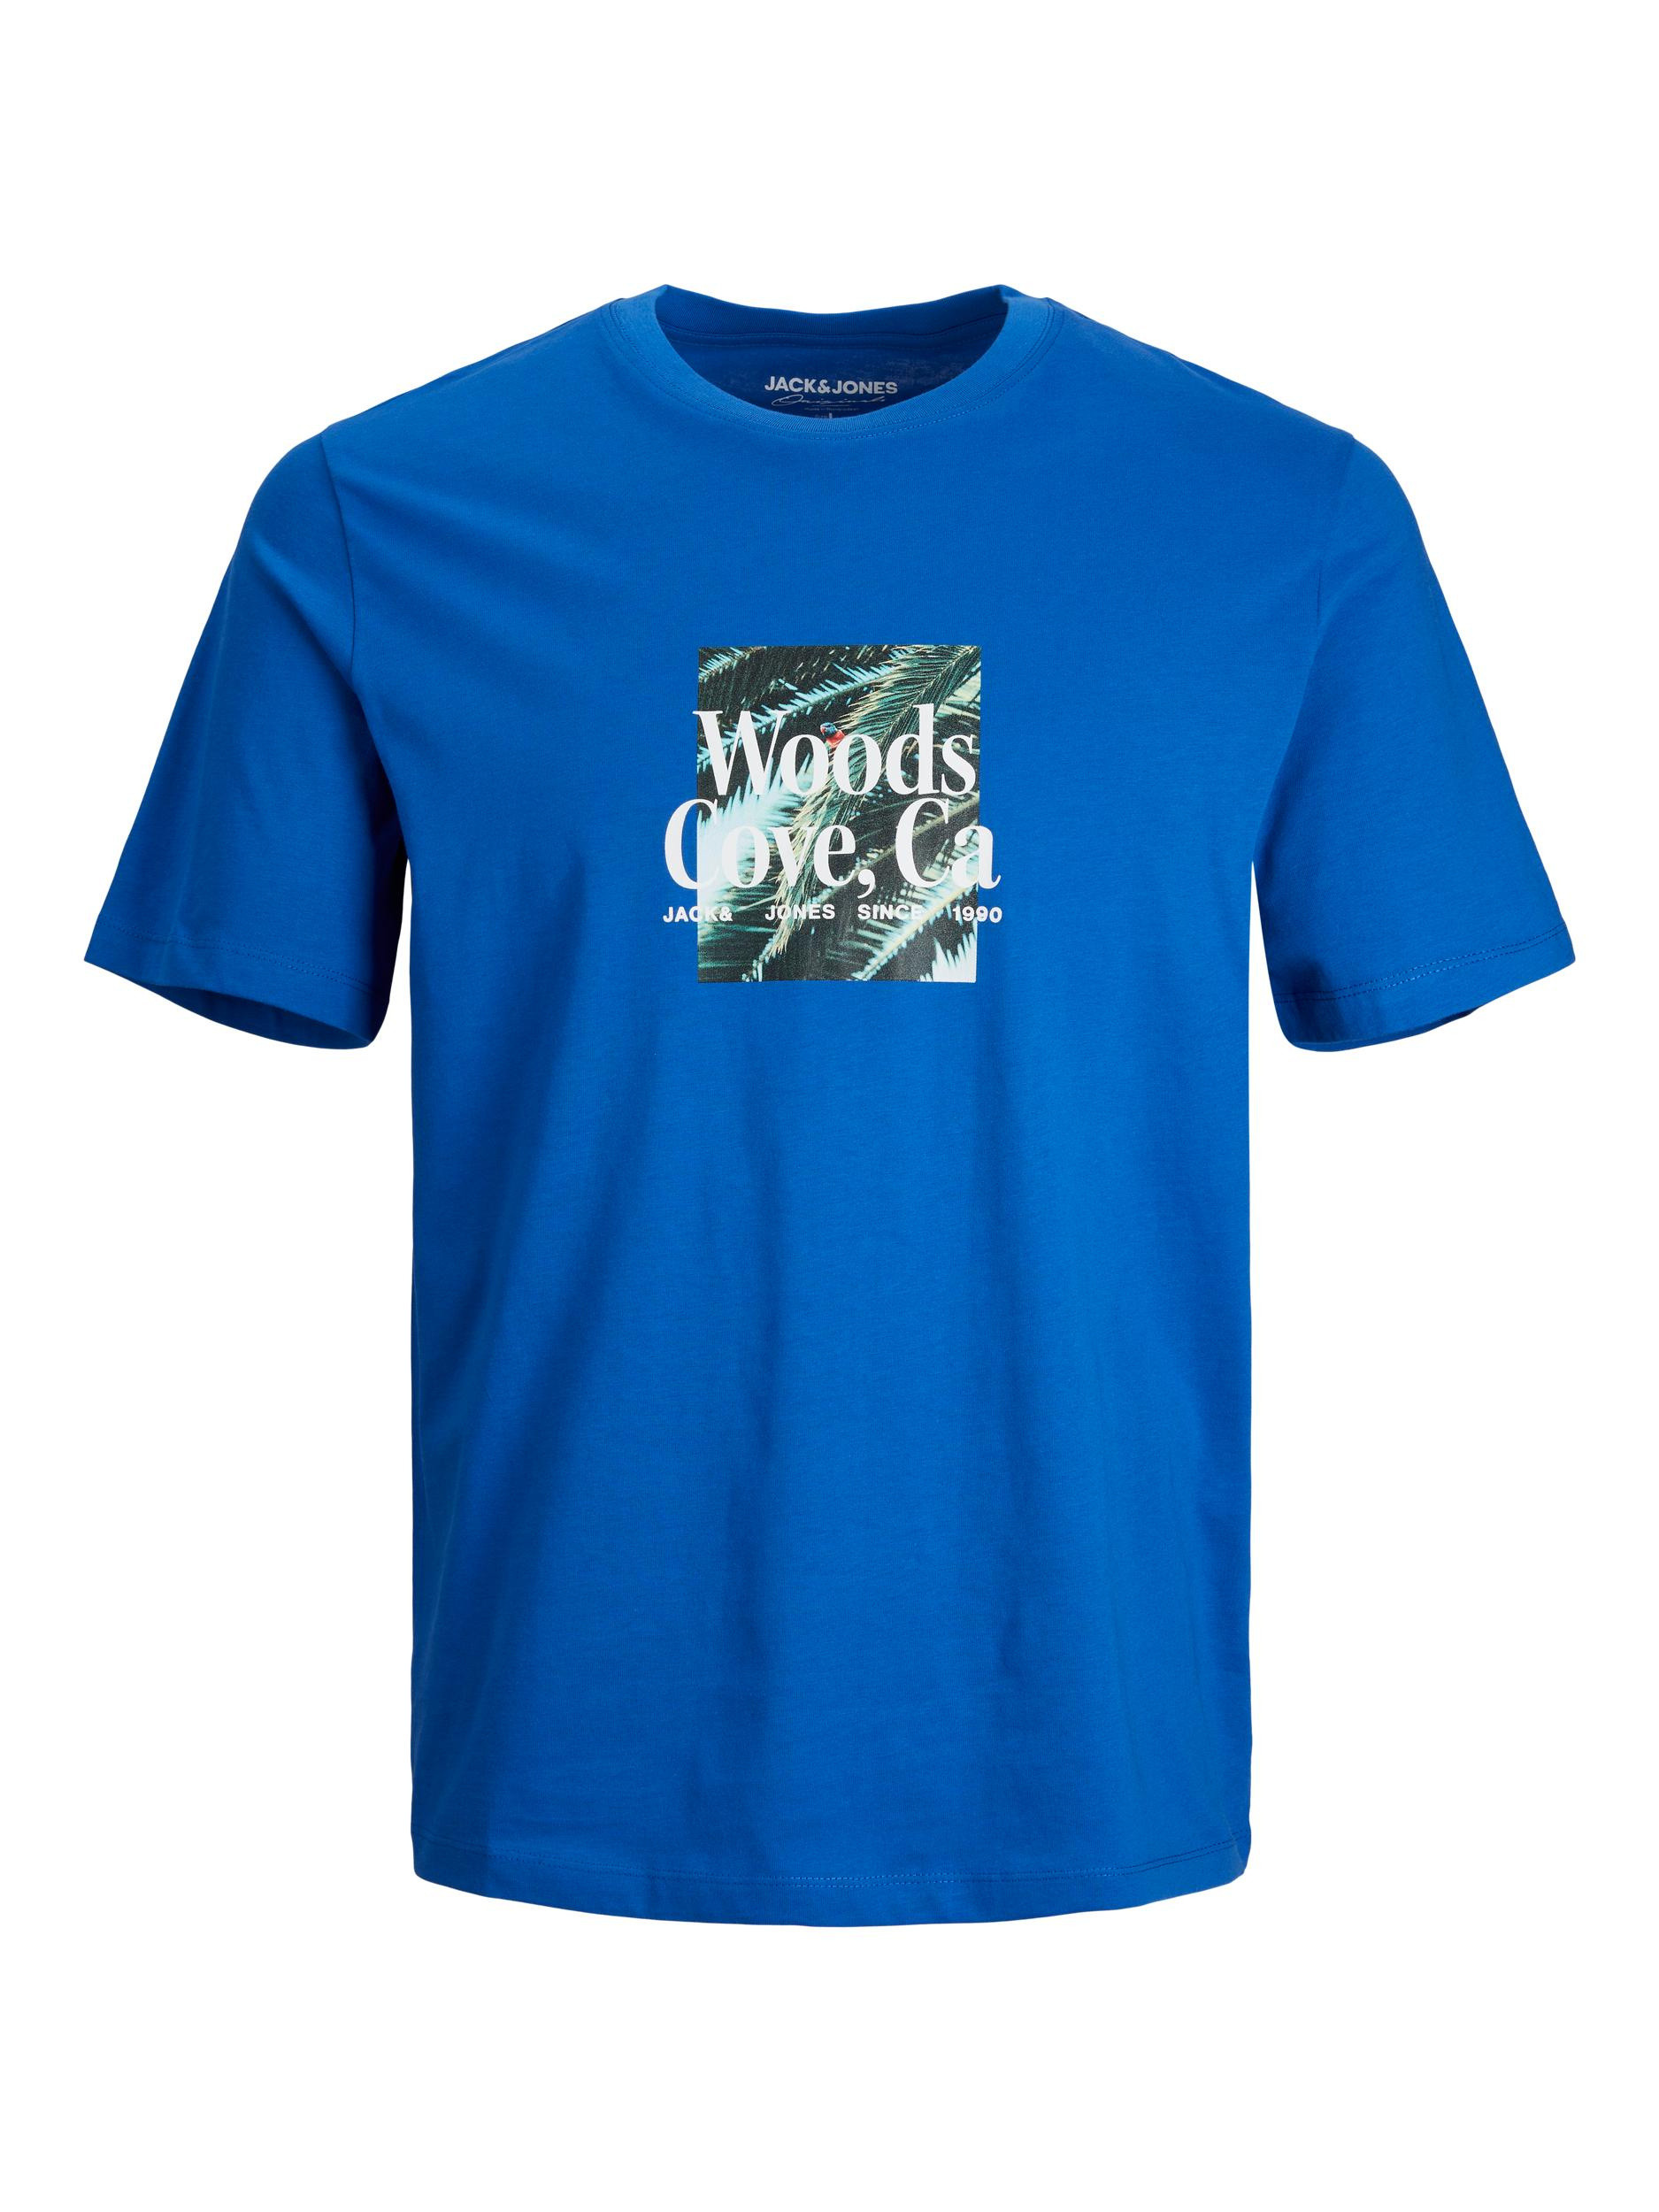 Jack & Jones - T-shirt con stampa in cotone, Blu royal, large image number 0